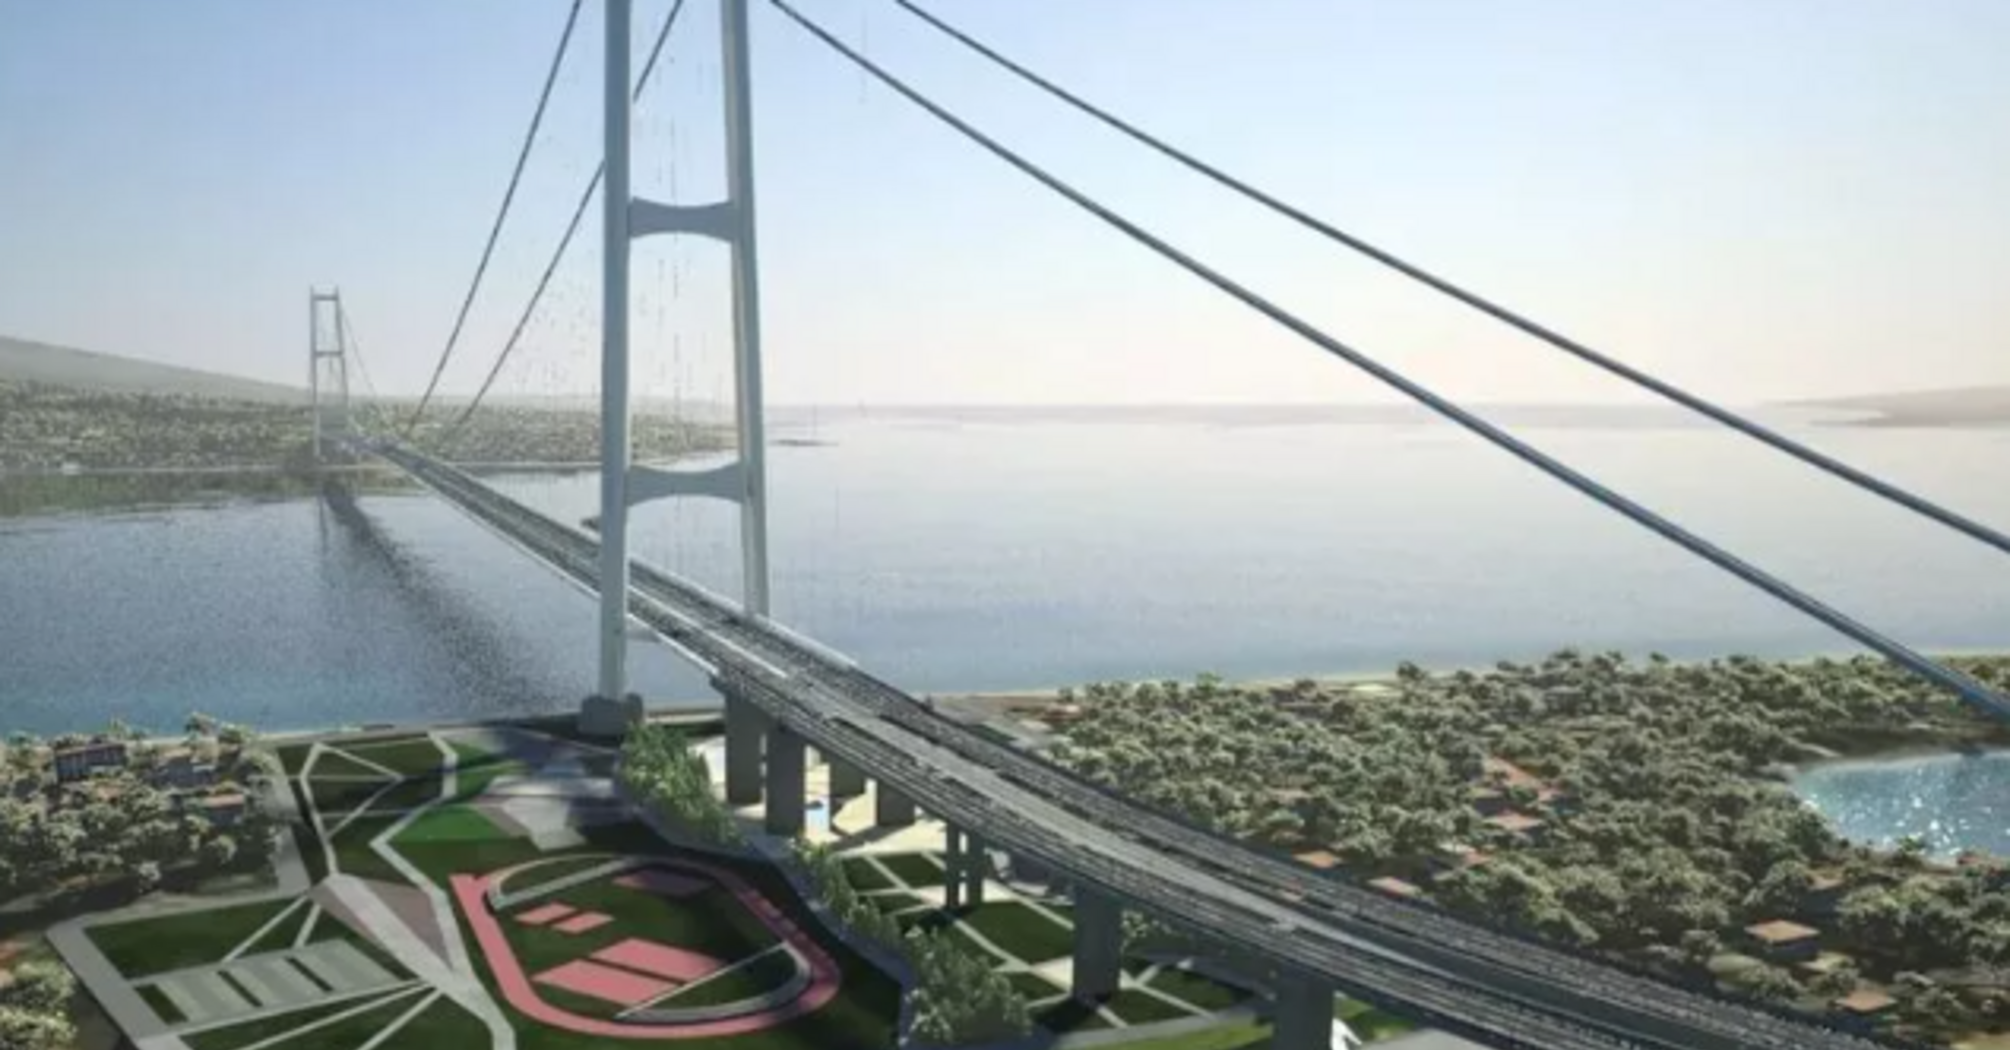 The bridge project